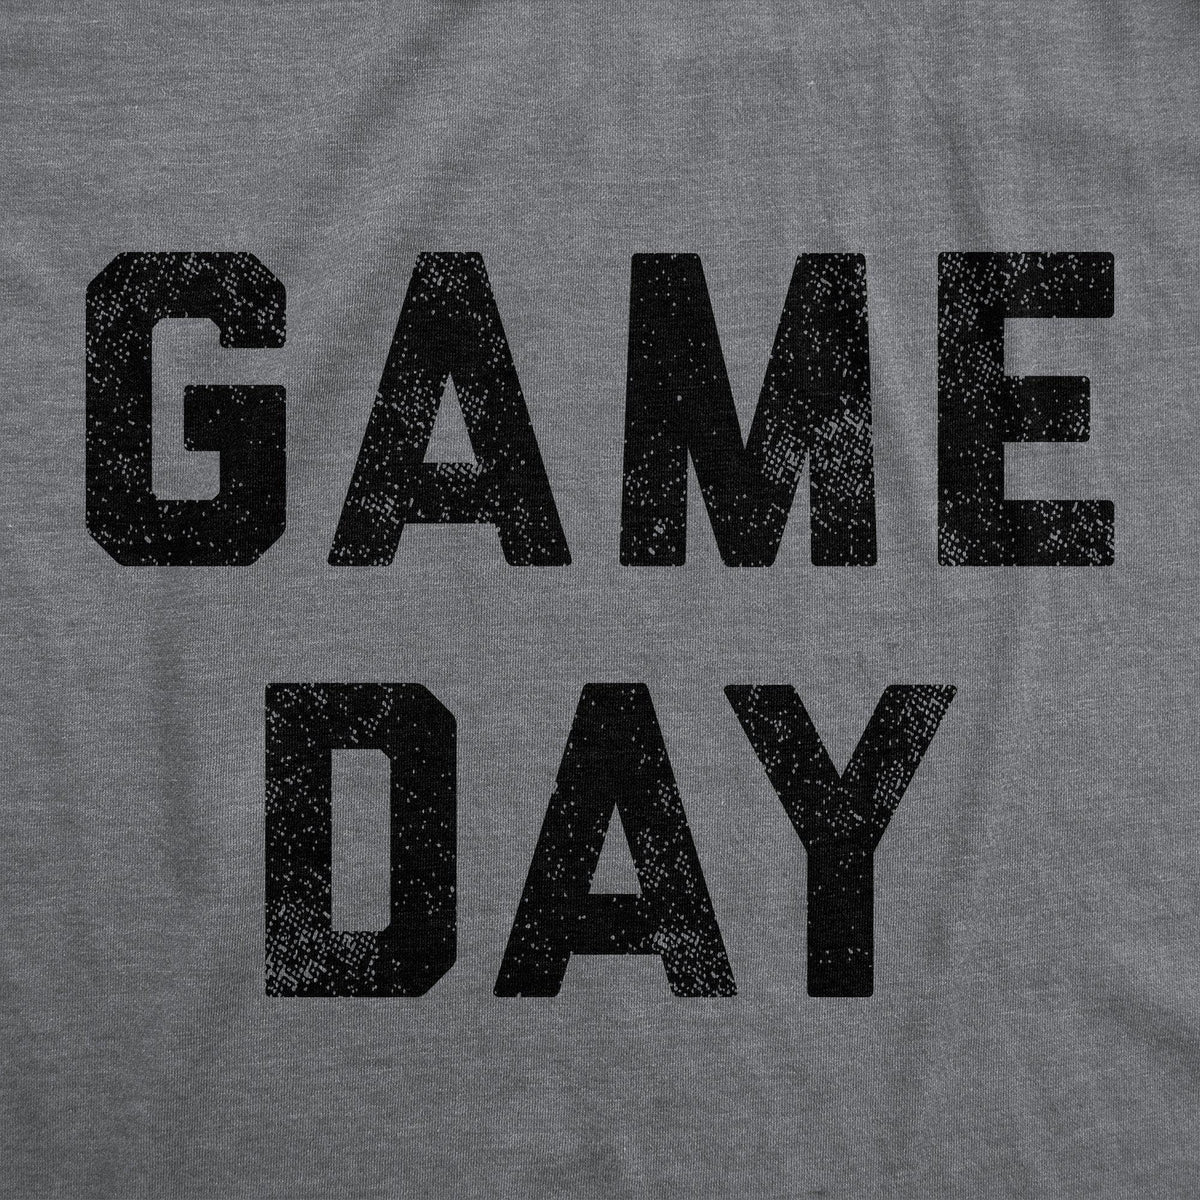 Game Day Men&#39;s Tshirt - Crazy Dog T-Shirts